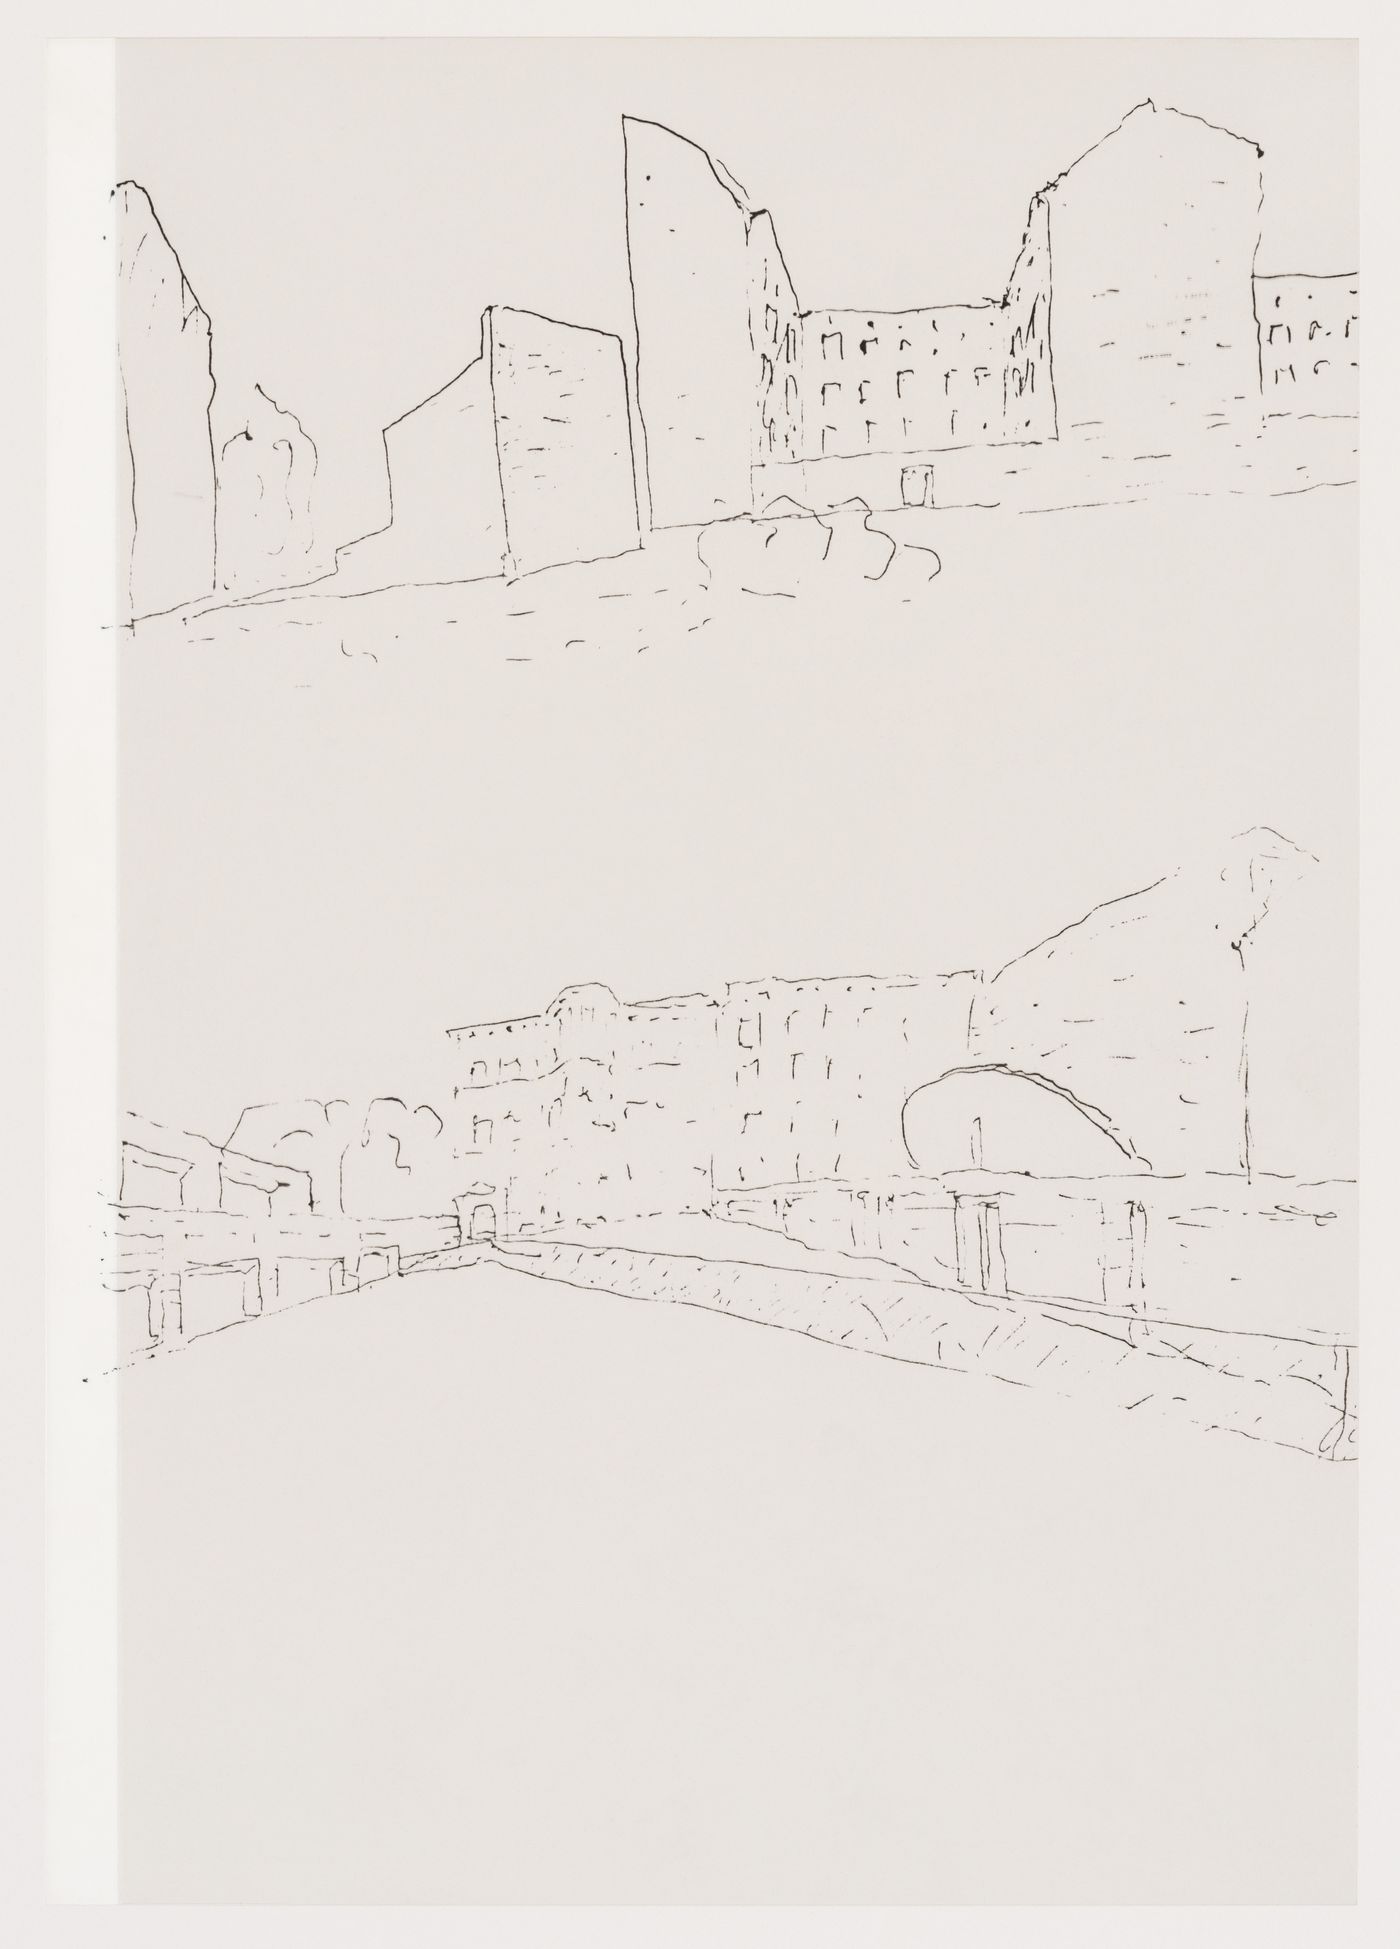 Sketches of existing city fabric and city block interiors of Kreuzberg, Block 121, Berlin